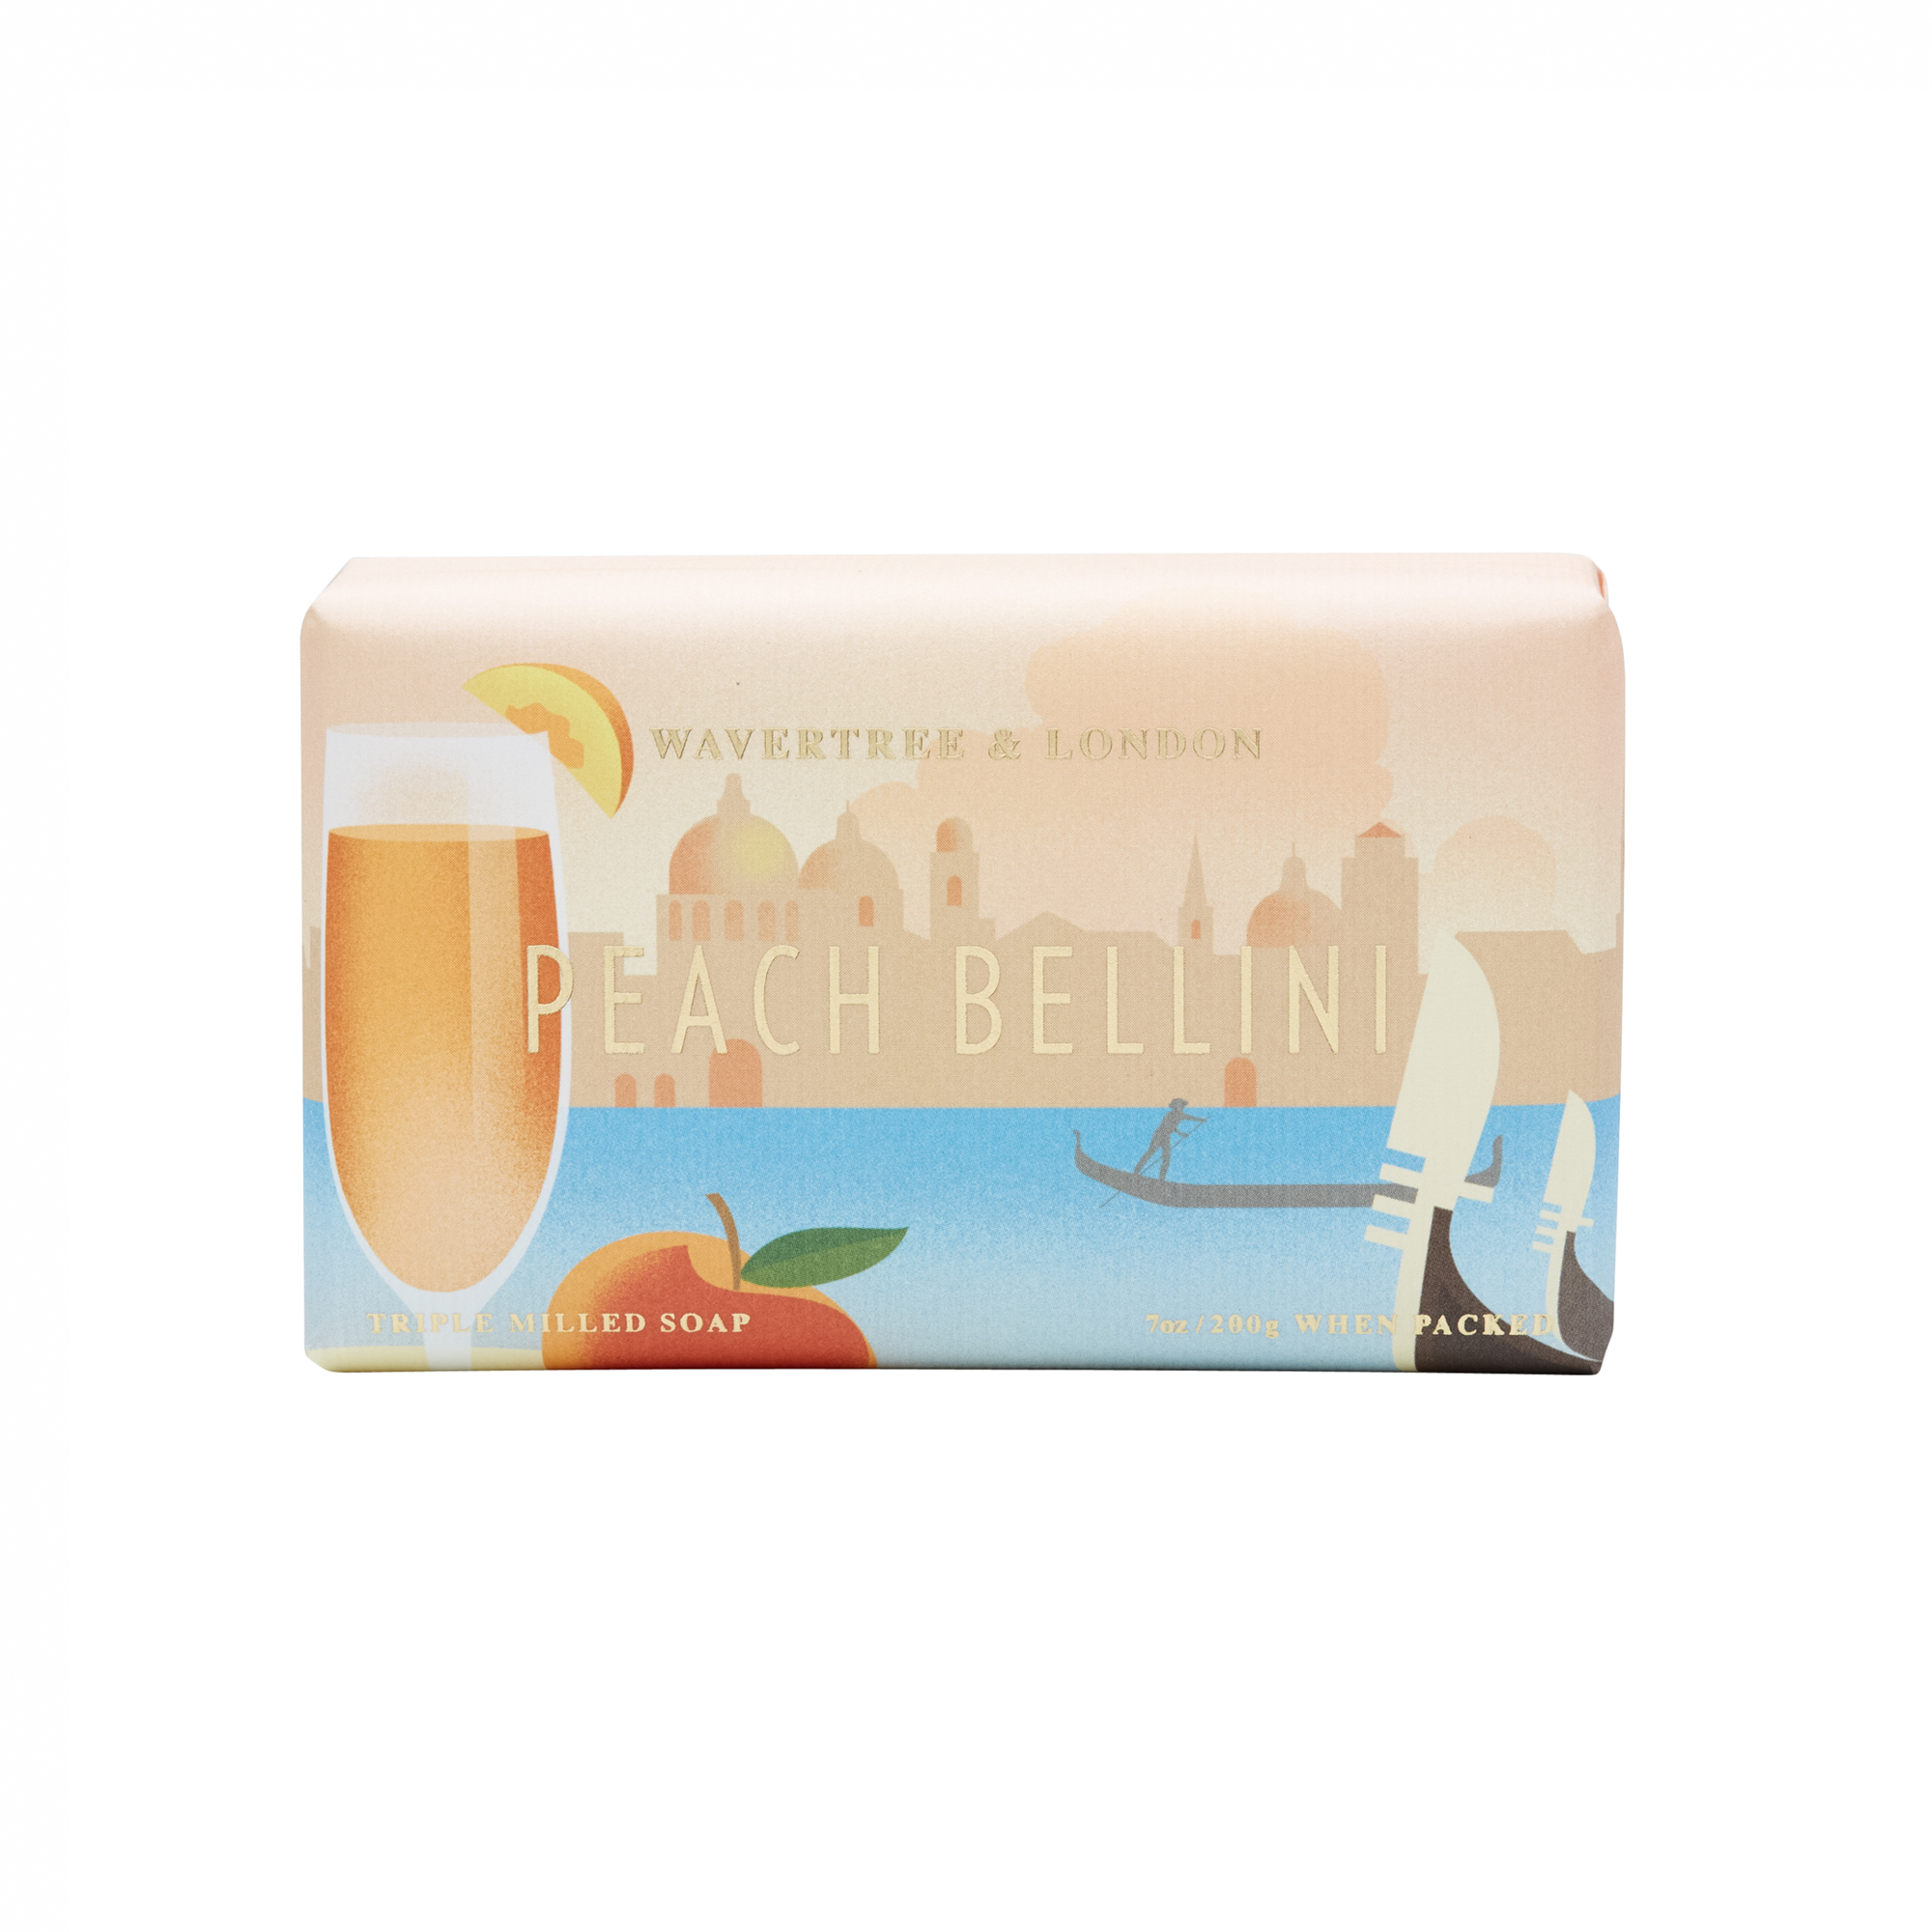 Peach Bellini Soap Bar 200g